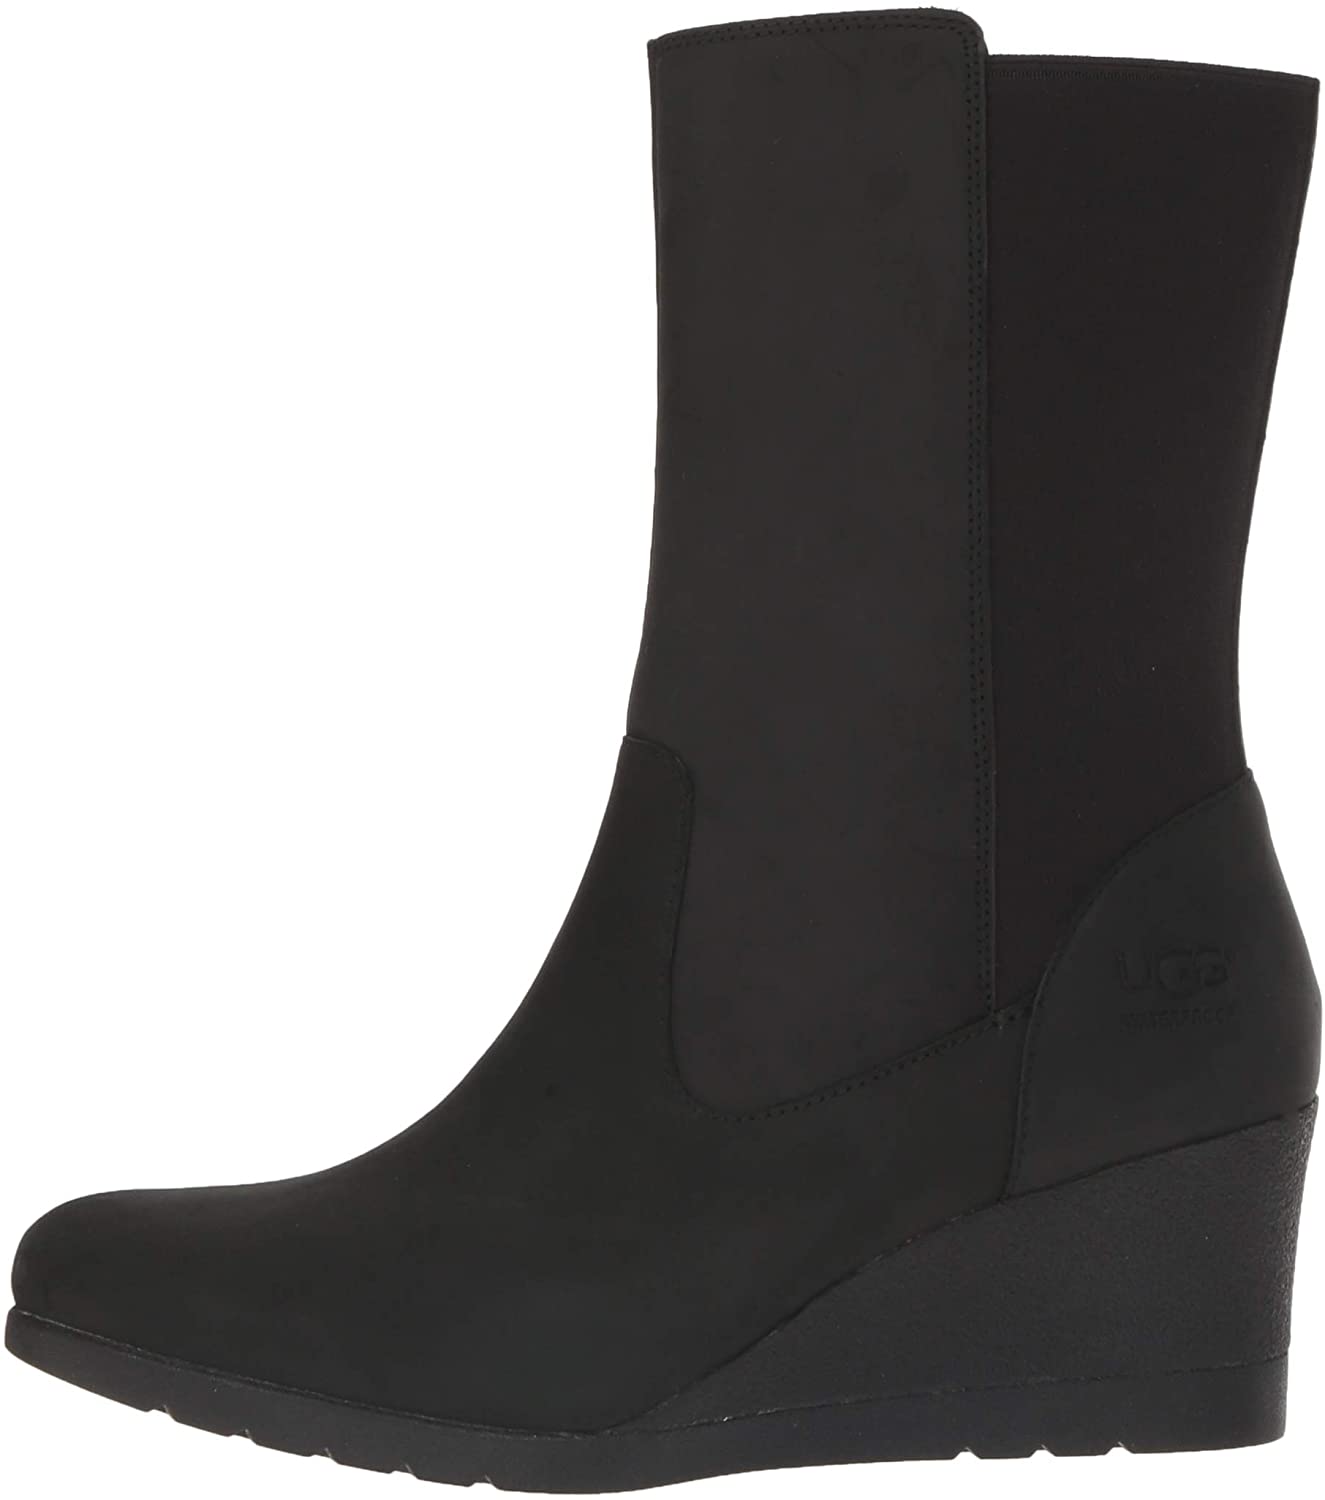 UGG Women's W Coraline Fashion Boot, Black, Size 8.5 RNFp | eBay